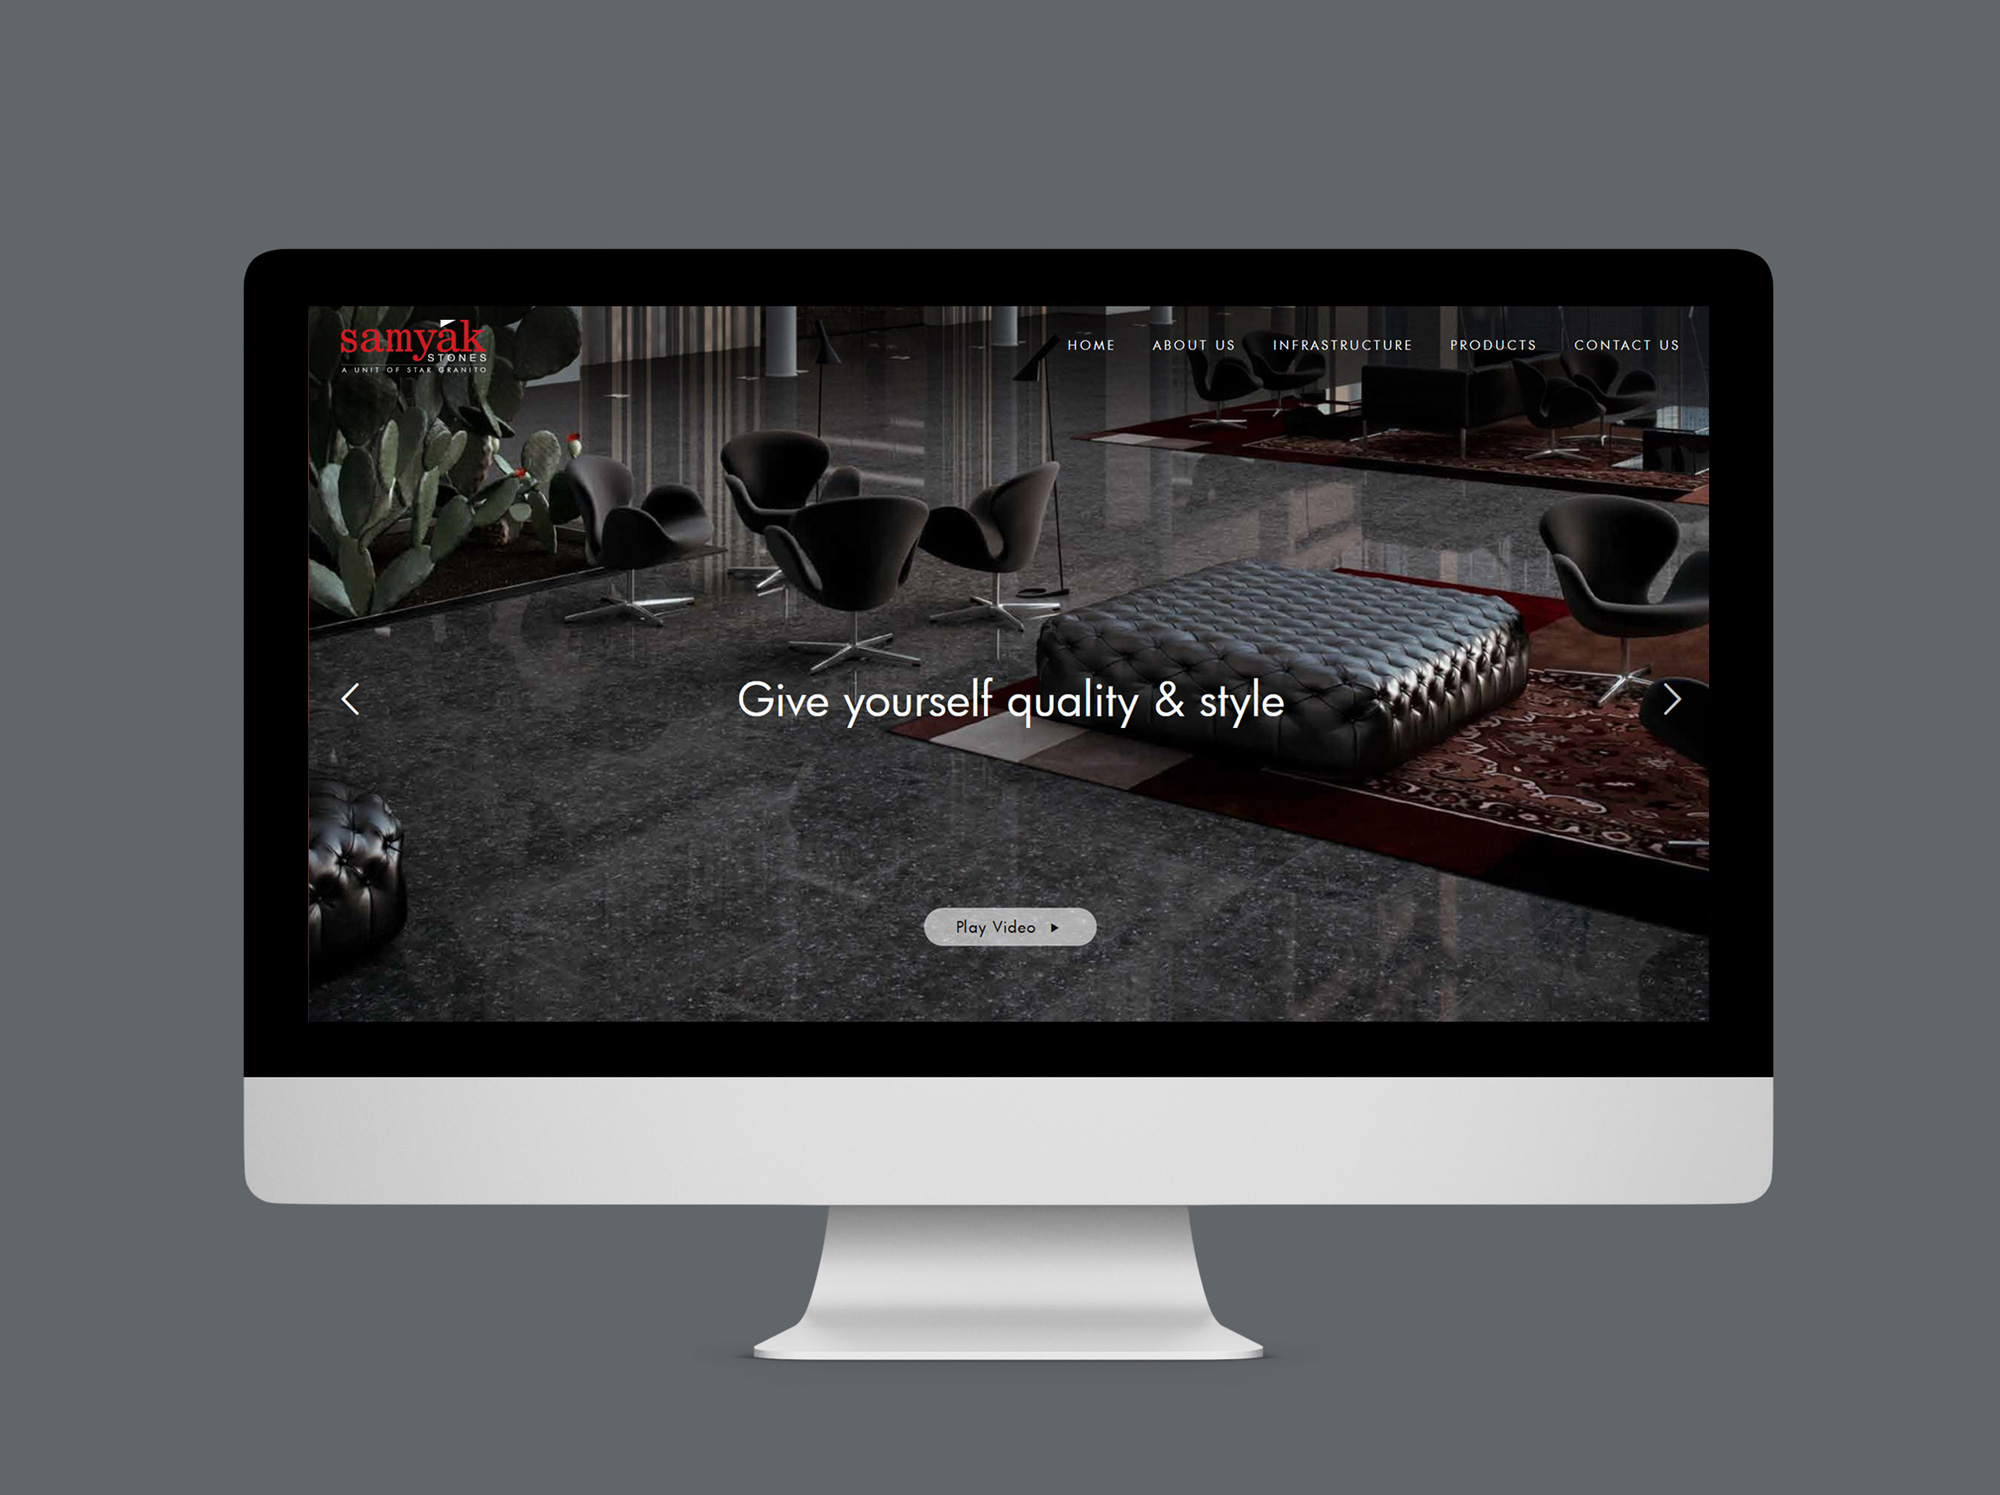 Samyak Stones Website Design